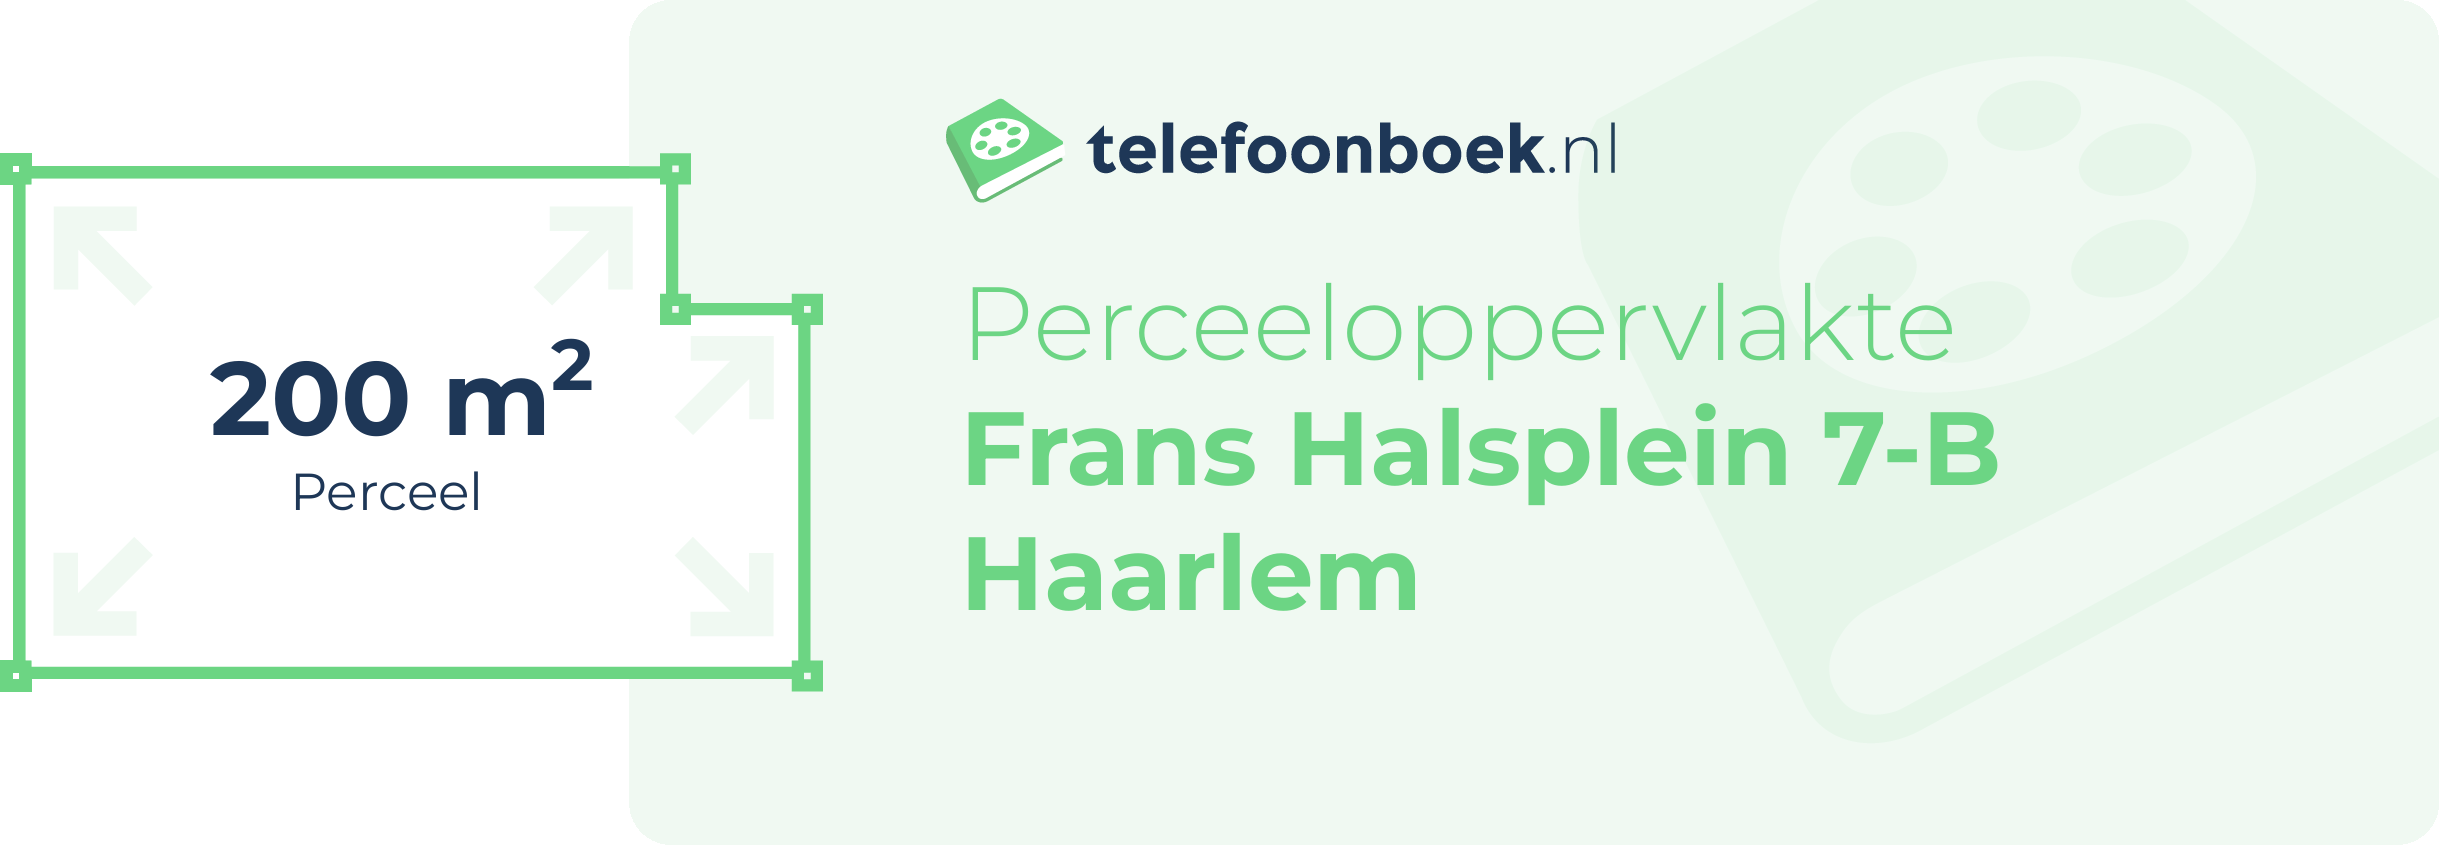 Perceeloppervlakte Frans Halsplein 7-B Haarlem